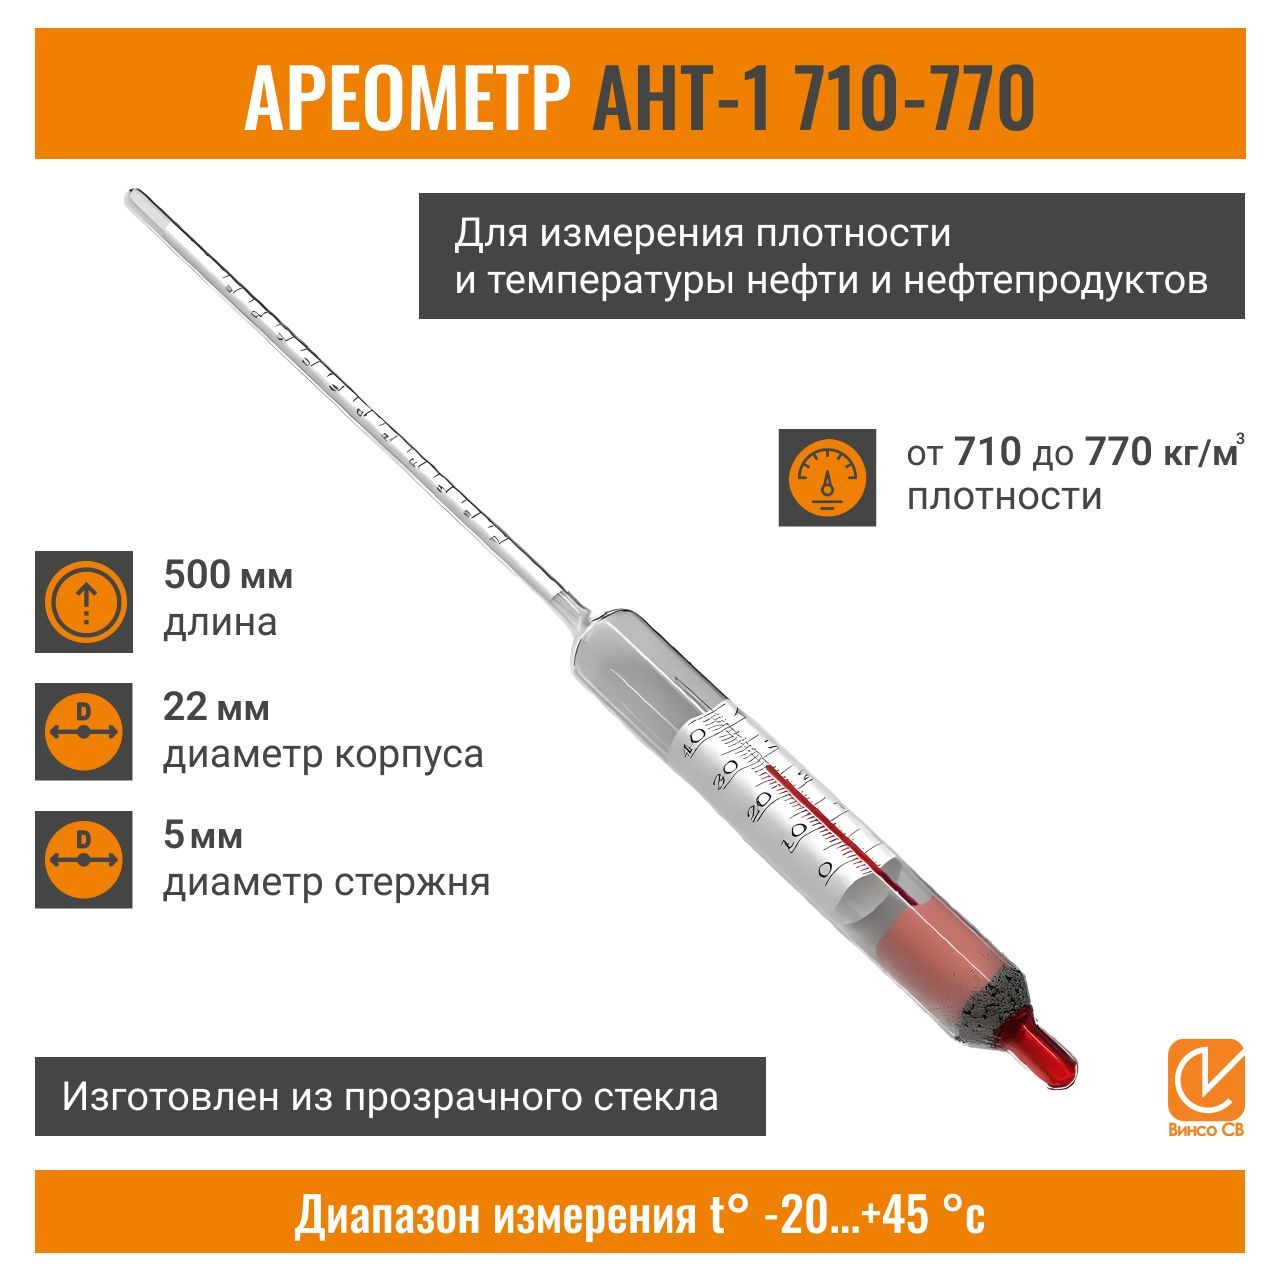 Ареометр для нефтепродуктов ант-1 830-890. Ареометр ант-1 710-770. Ареометр ант-1 710-770 кг/м3.